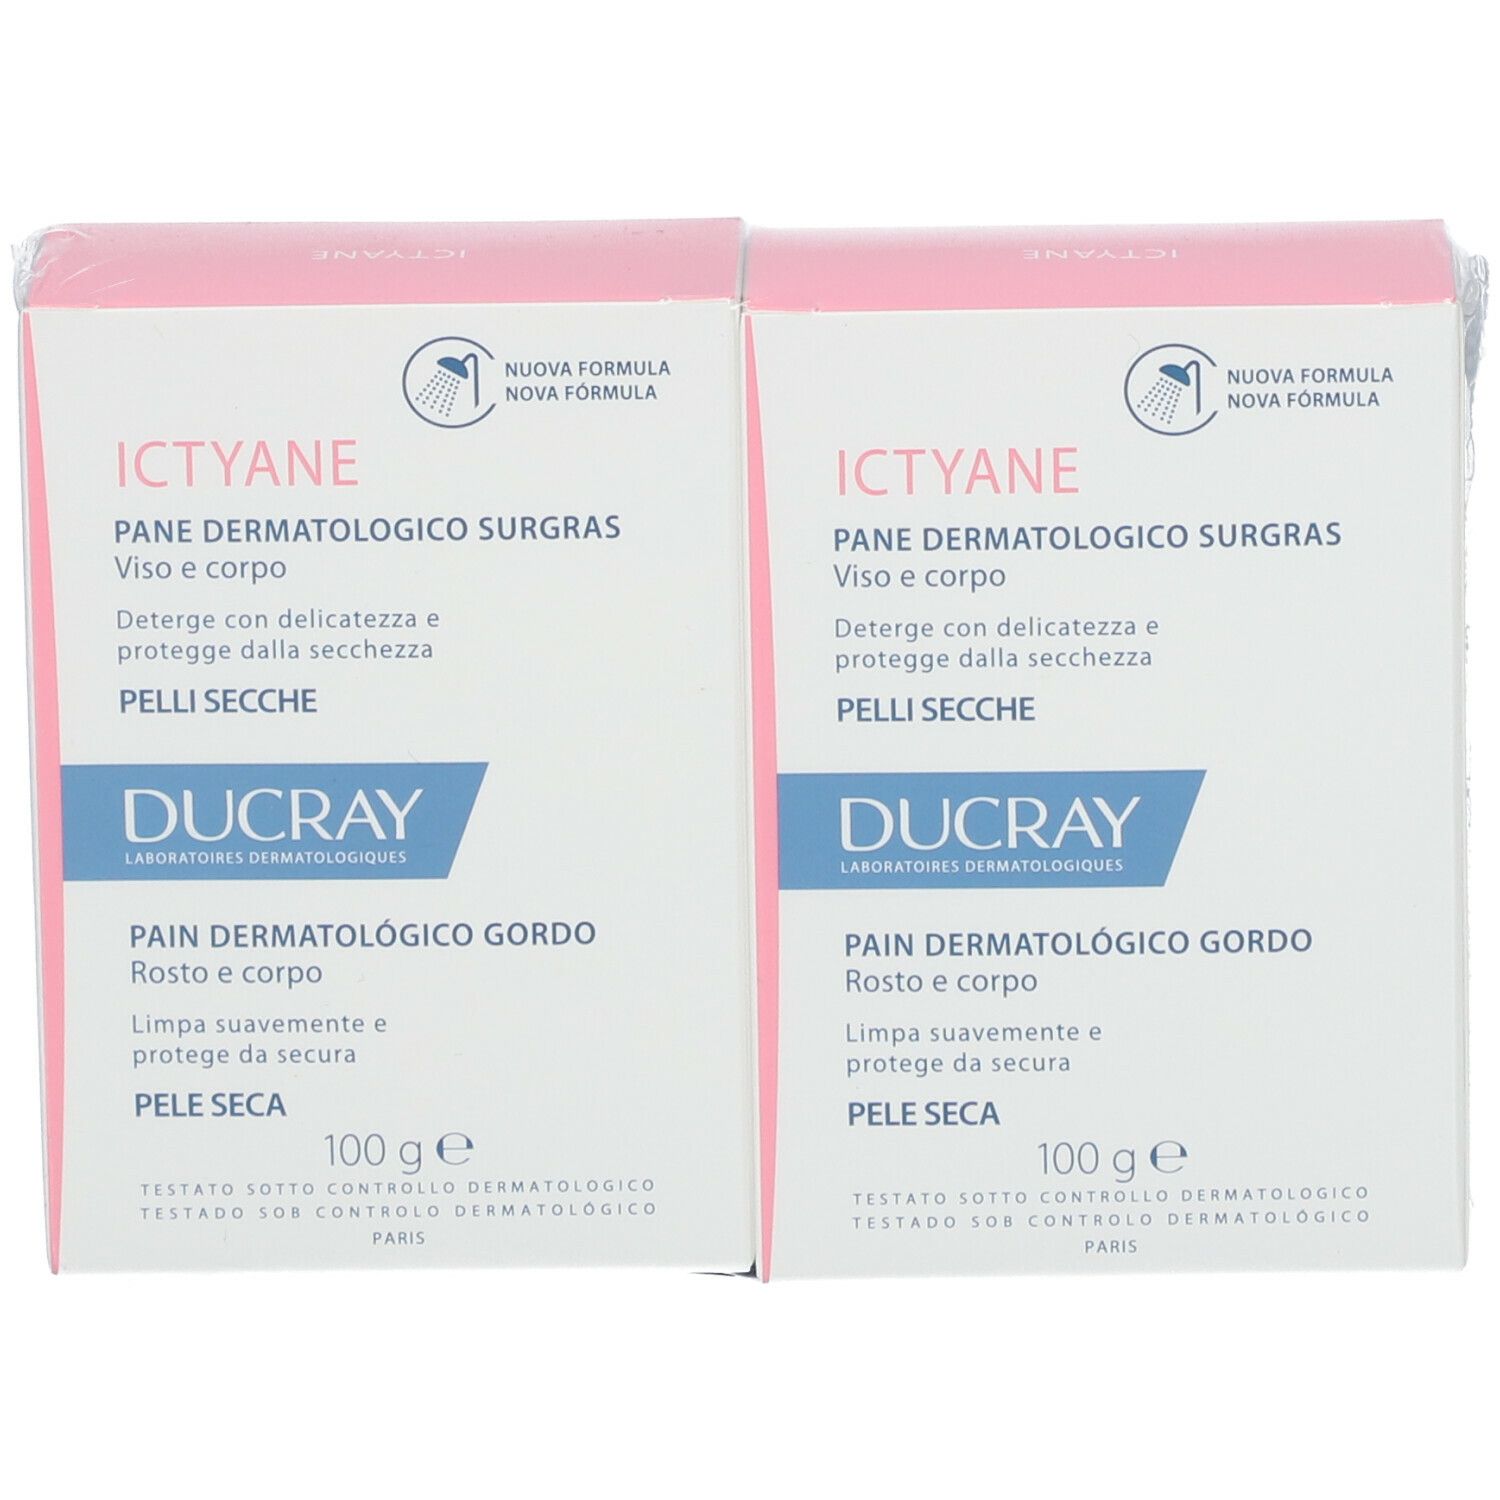 Ducray Ictyane Pain Dermatologique Surgras